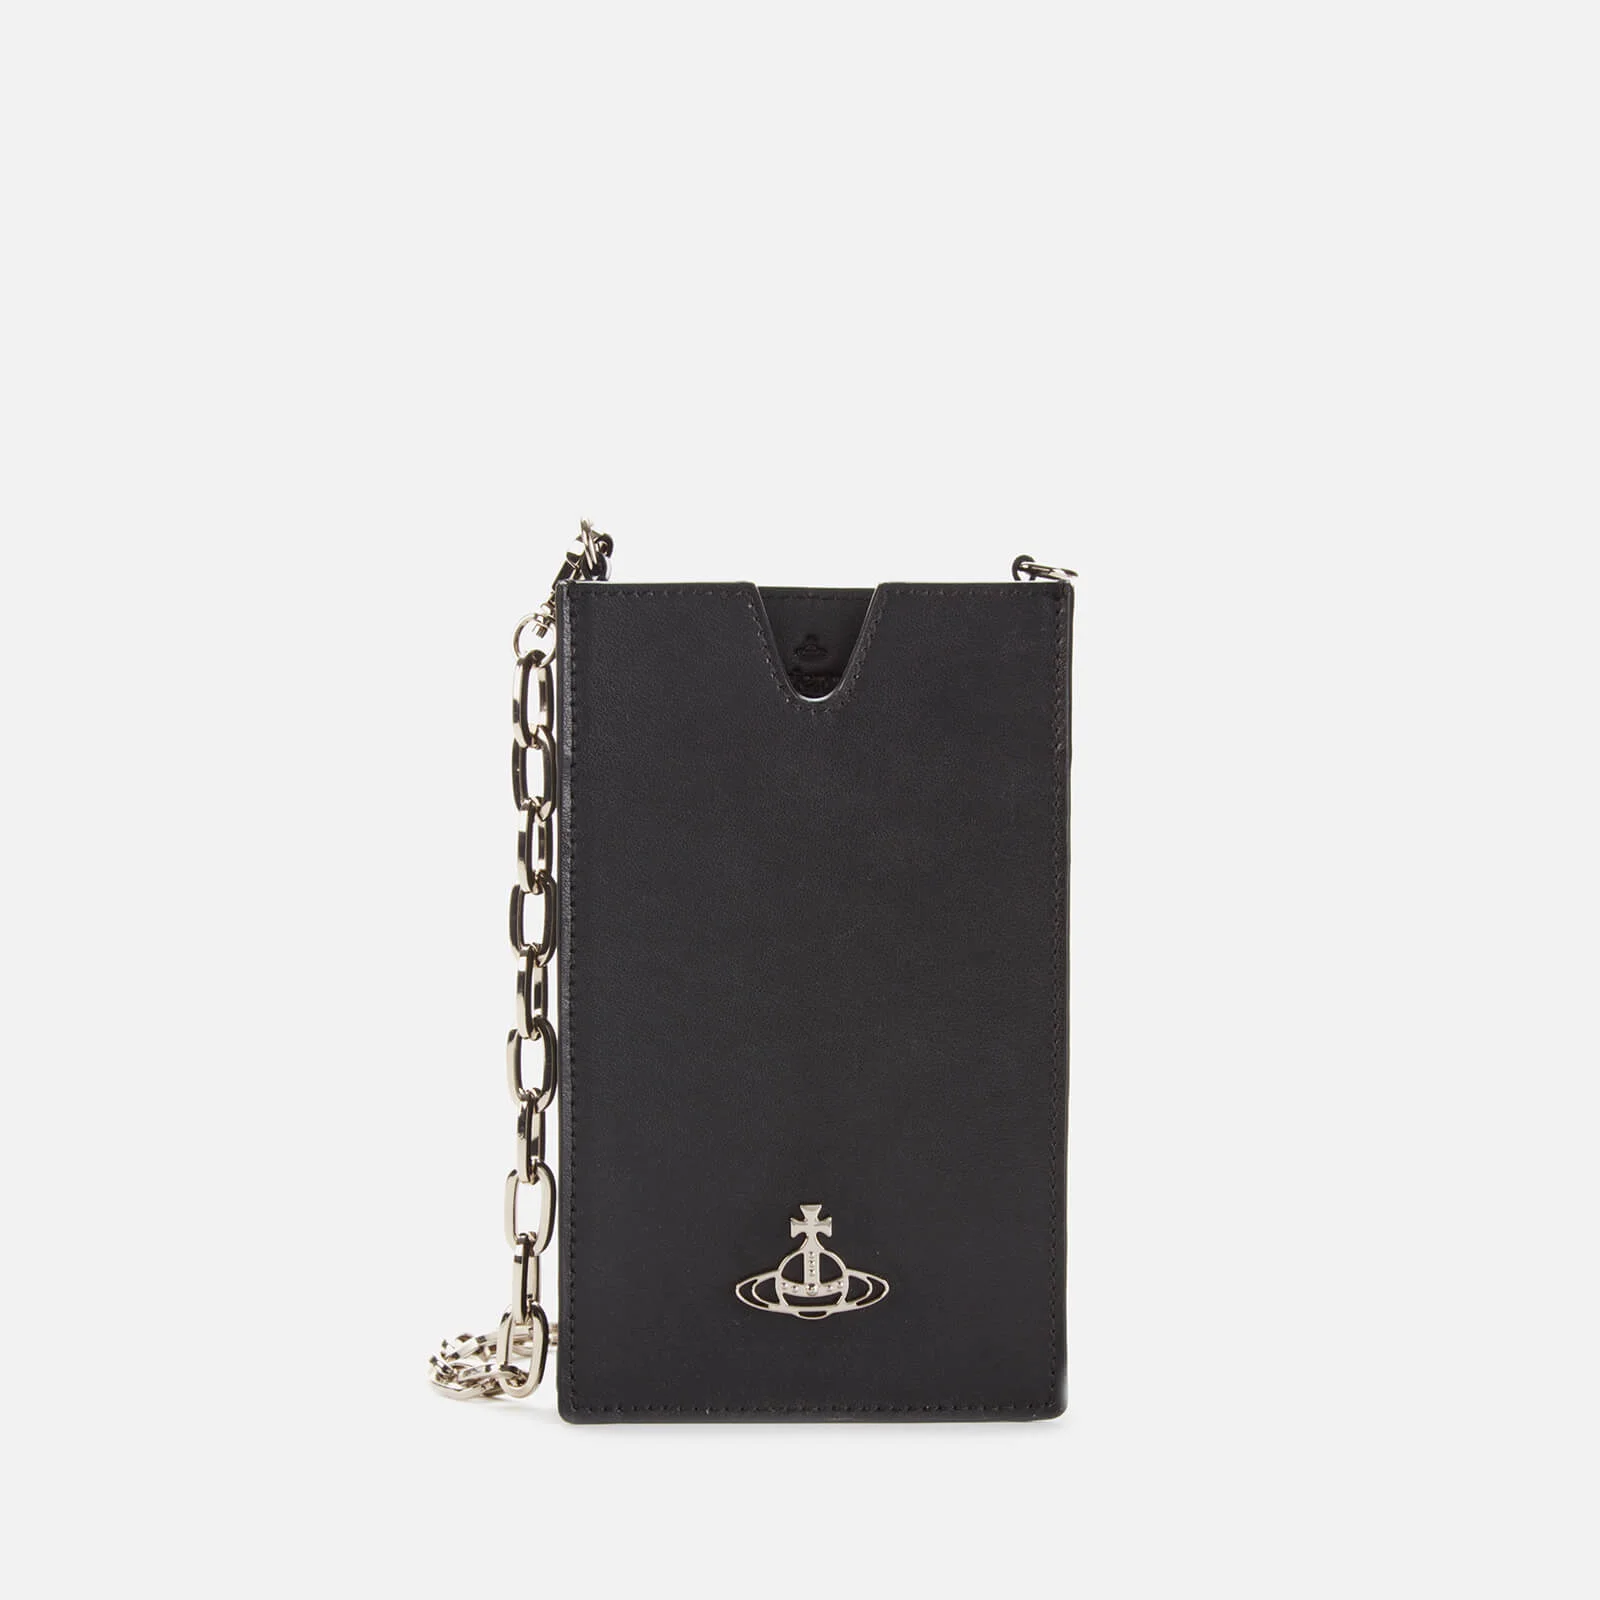 Vivienne Westwood Women's Dolce Phone Chain Bag - Black Image 1